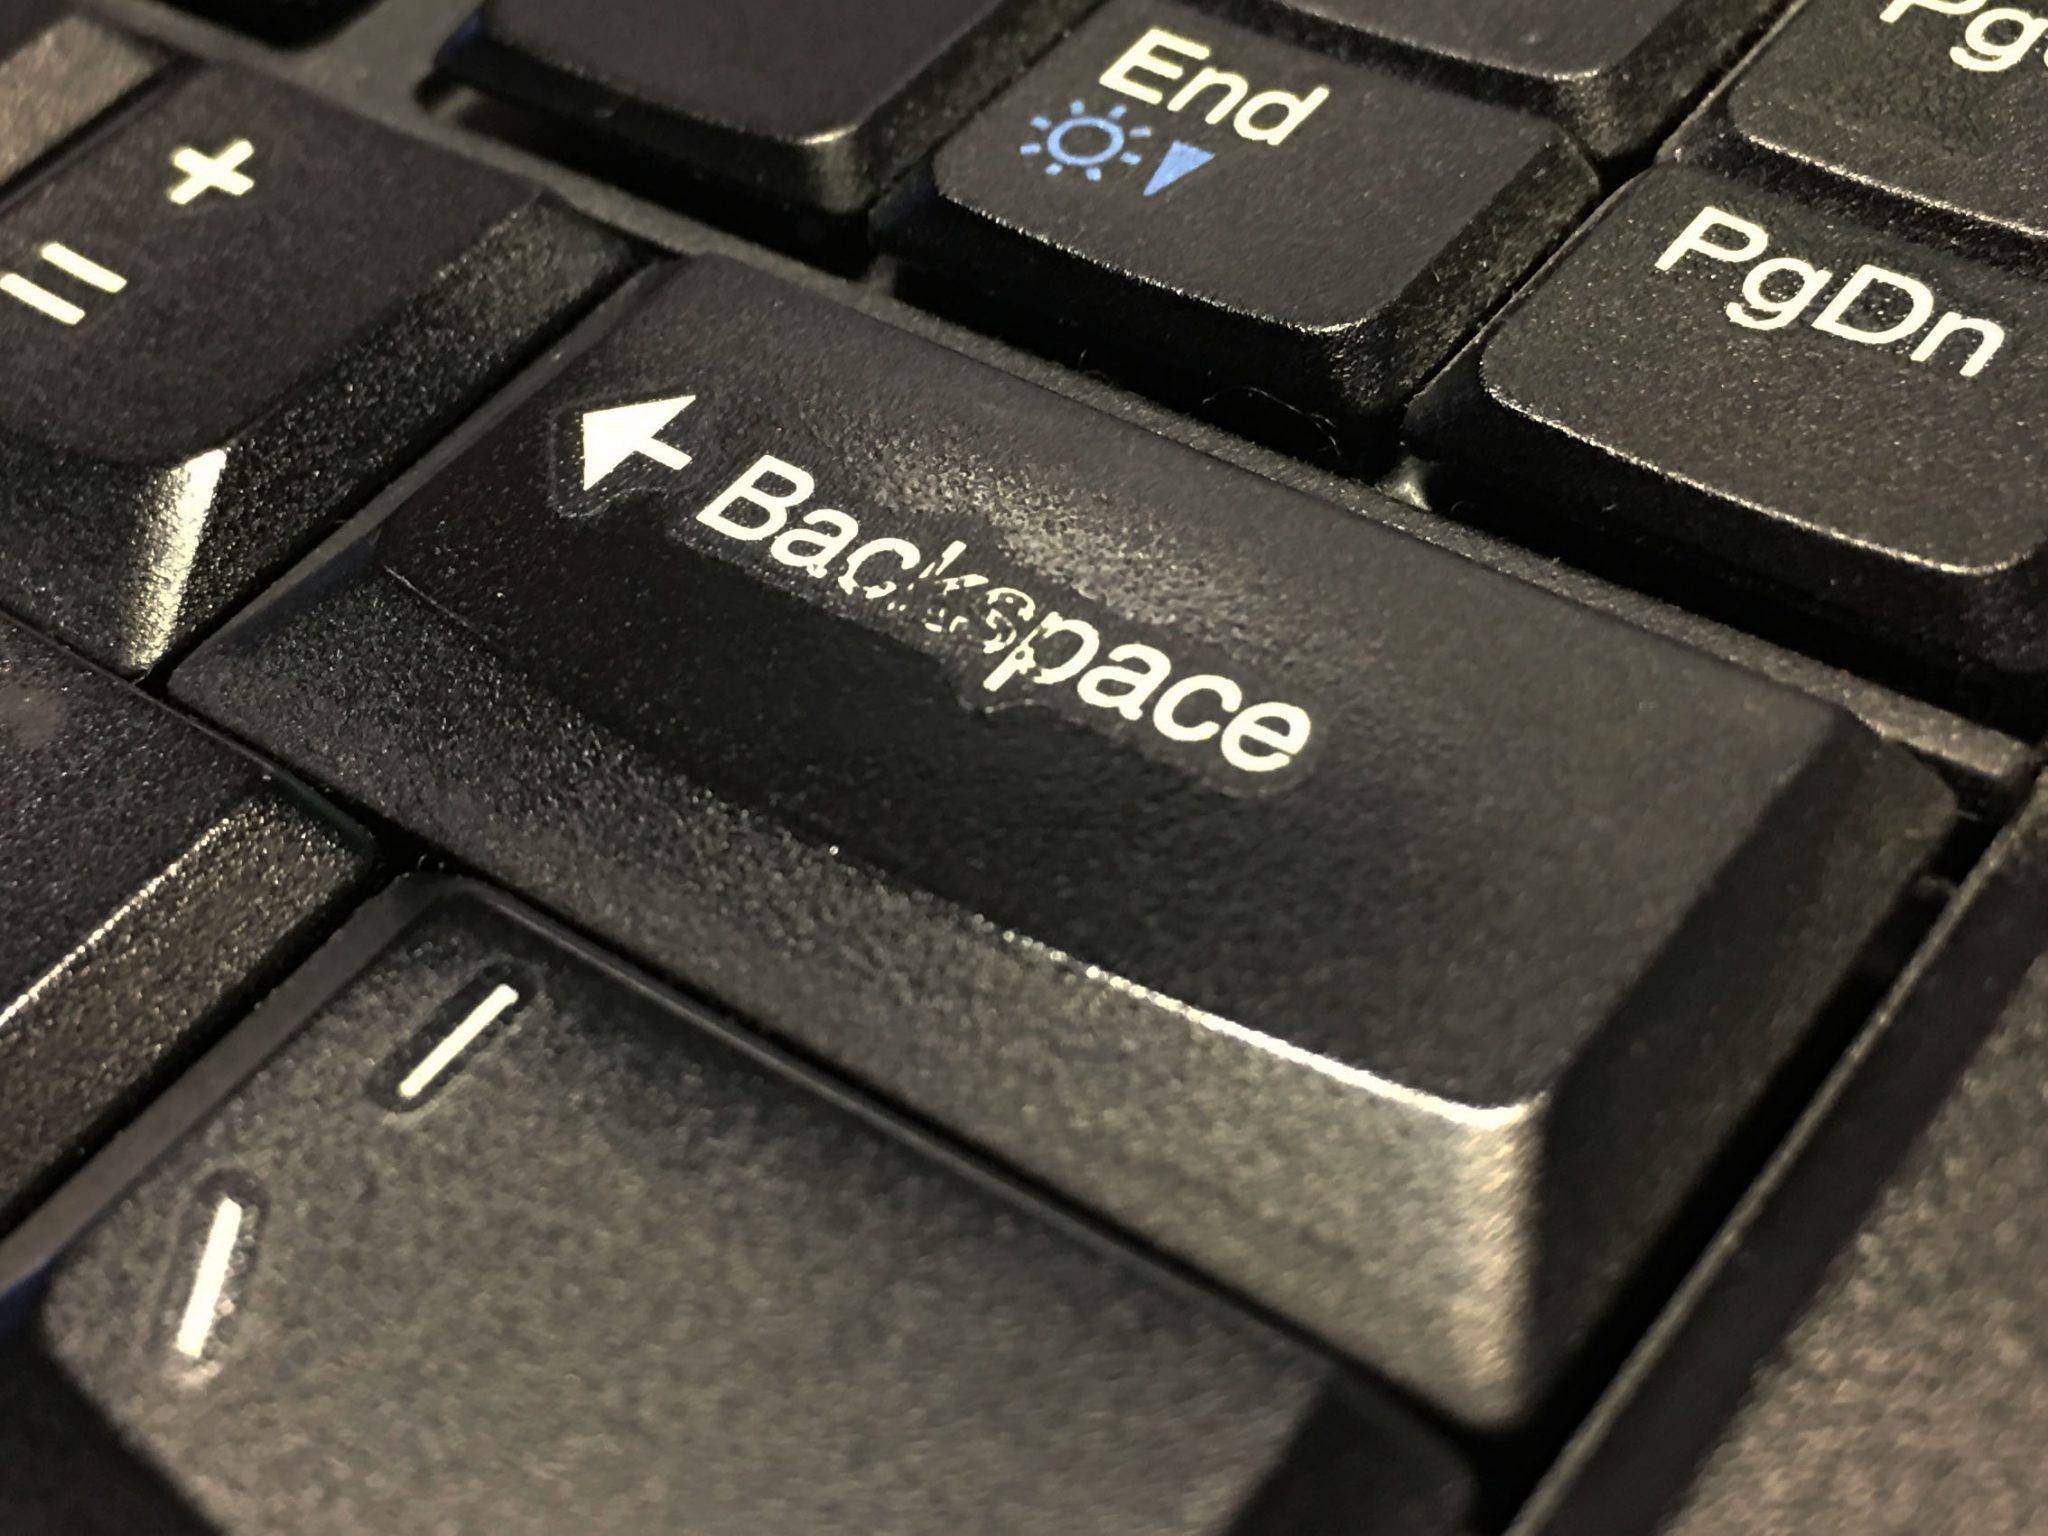 Где best. Кнопка Backspace. Клавиша Backspace на клавиатуре. Кнопка Backspace на клавиатуре ноутбука. Backpack кнопка на клавиатуре.